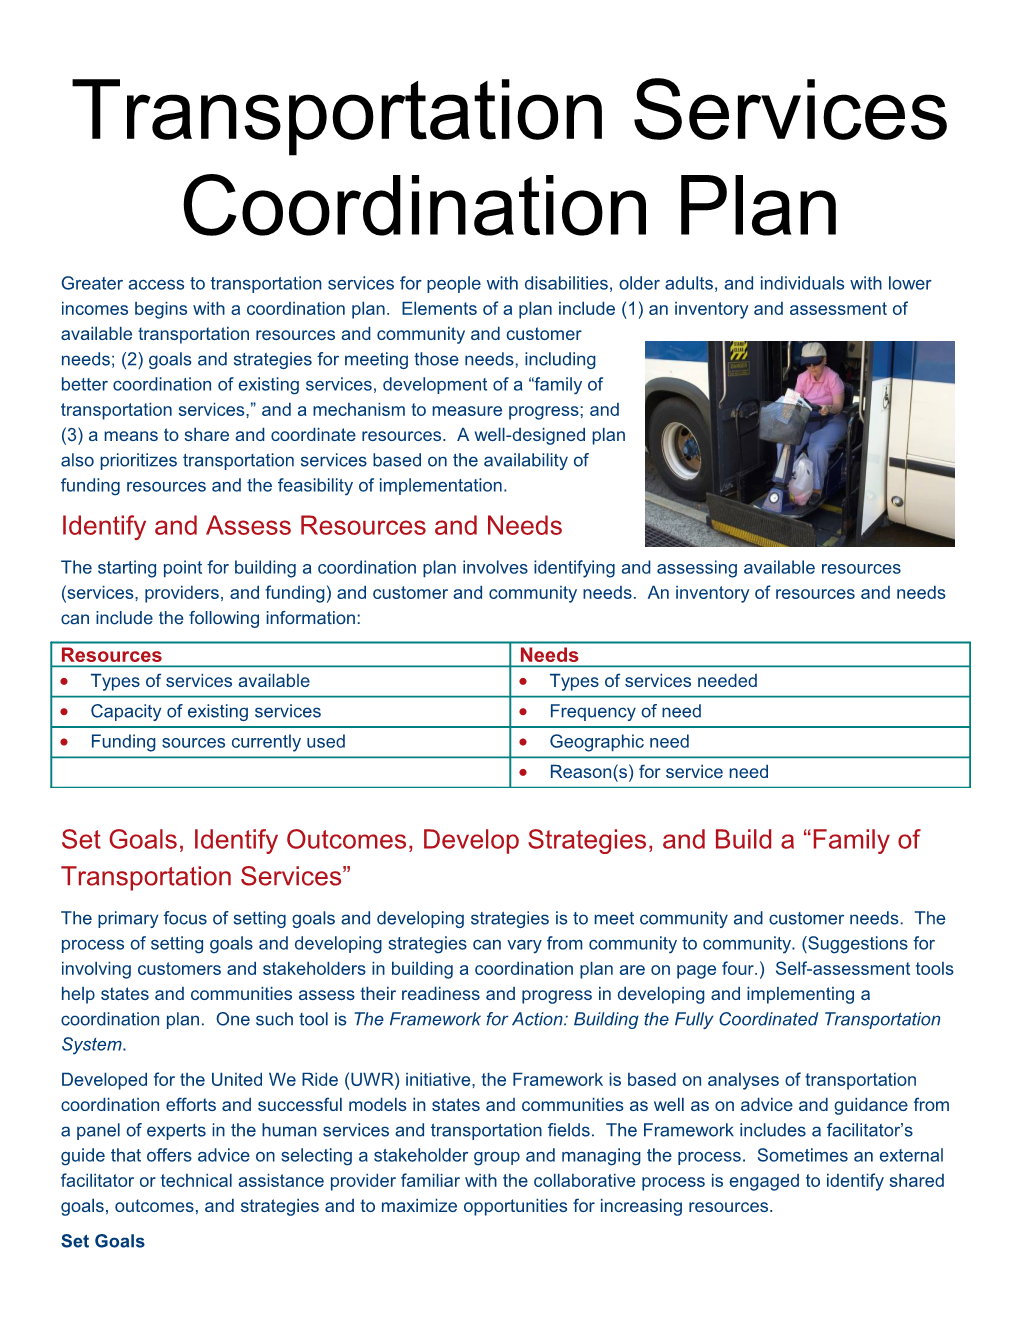 Transportation Services Coordination Plan